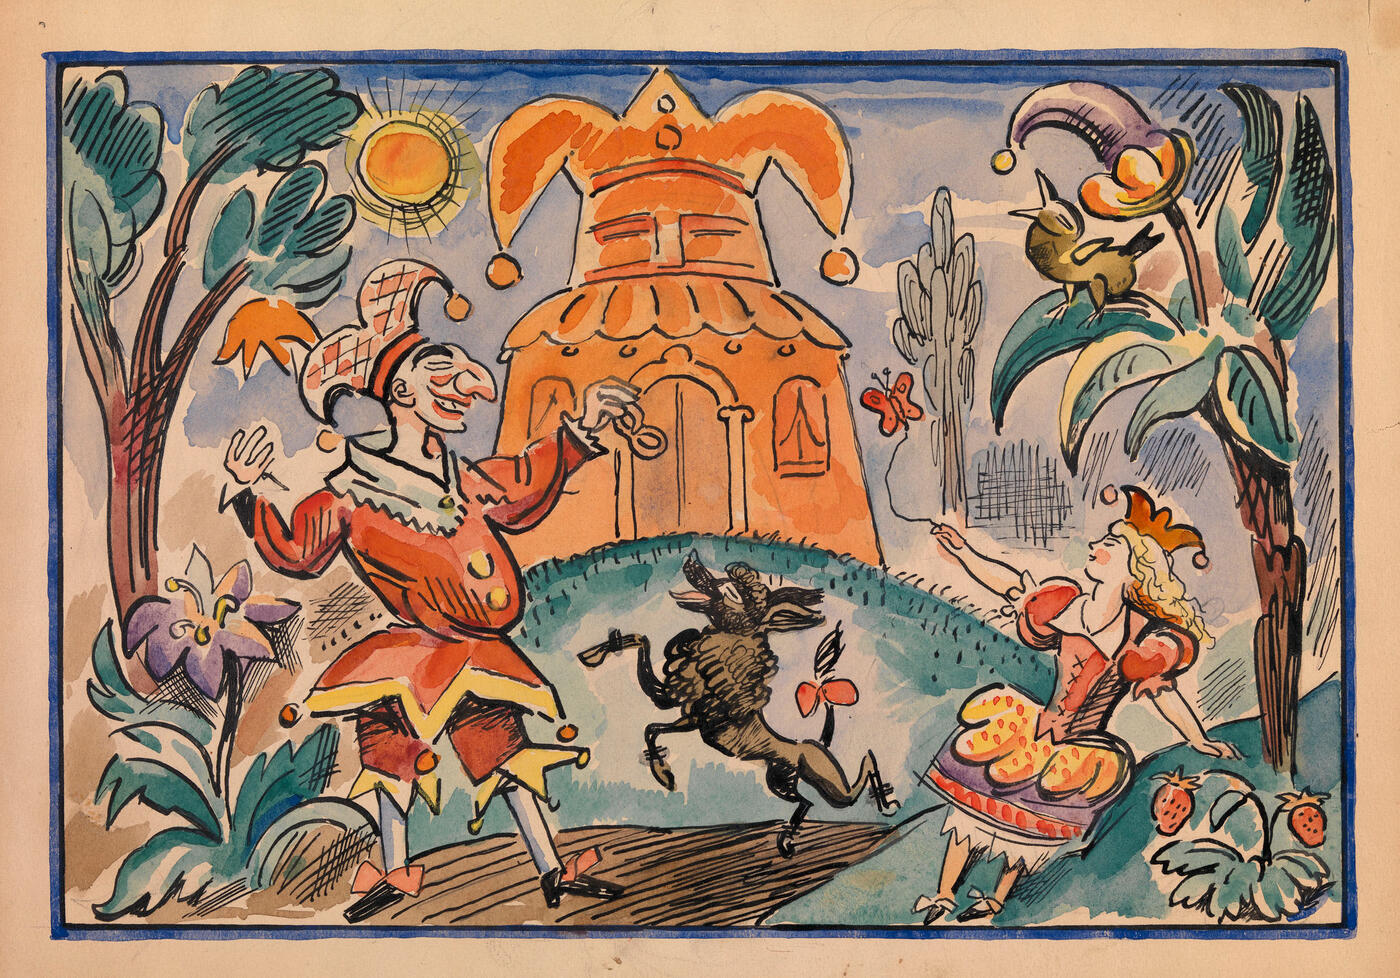 Illustration for "War of Petrushka and Stepka-Rastrepka" by Evgenii Schwartz.